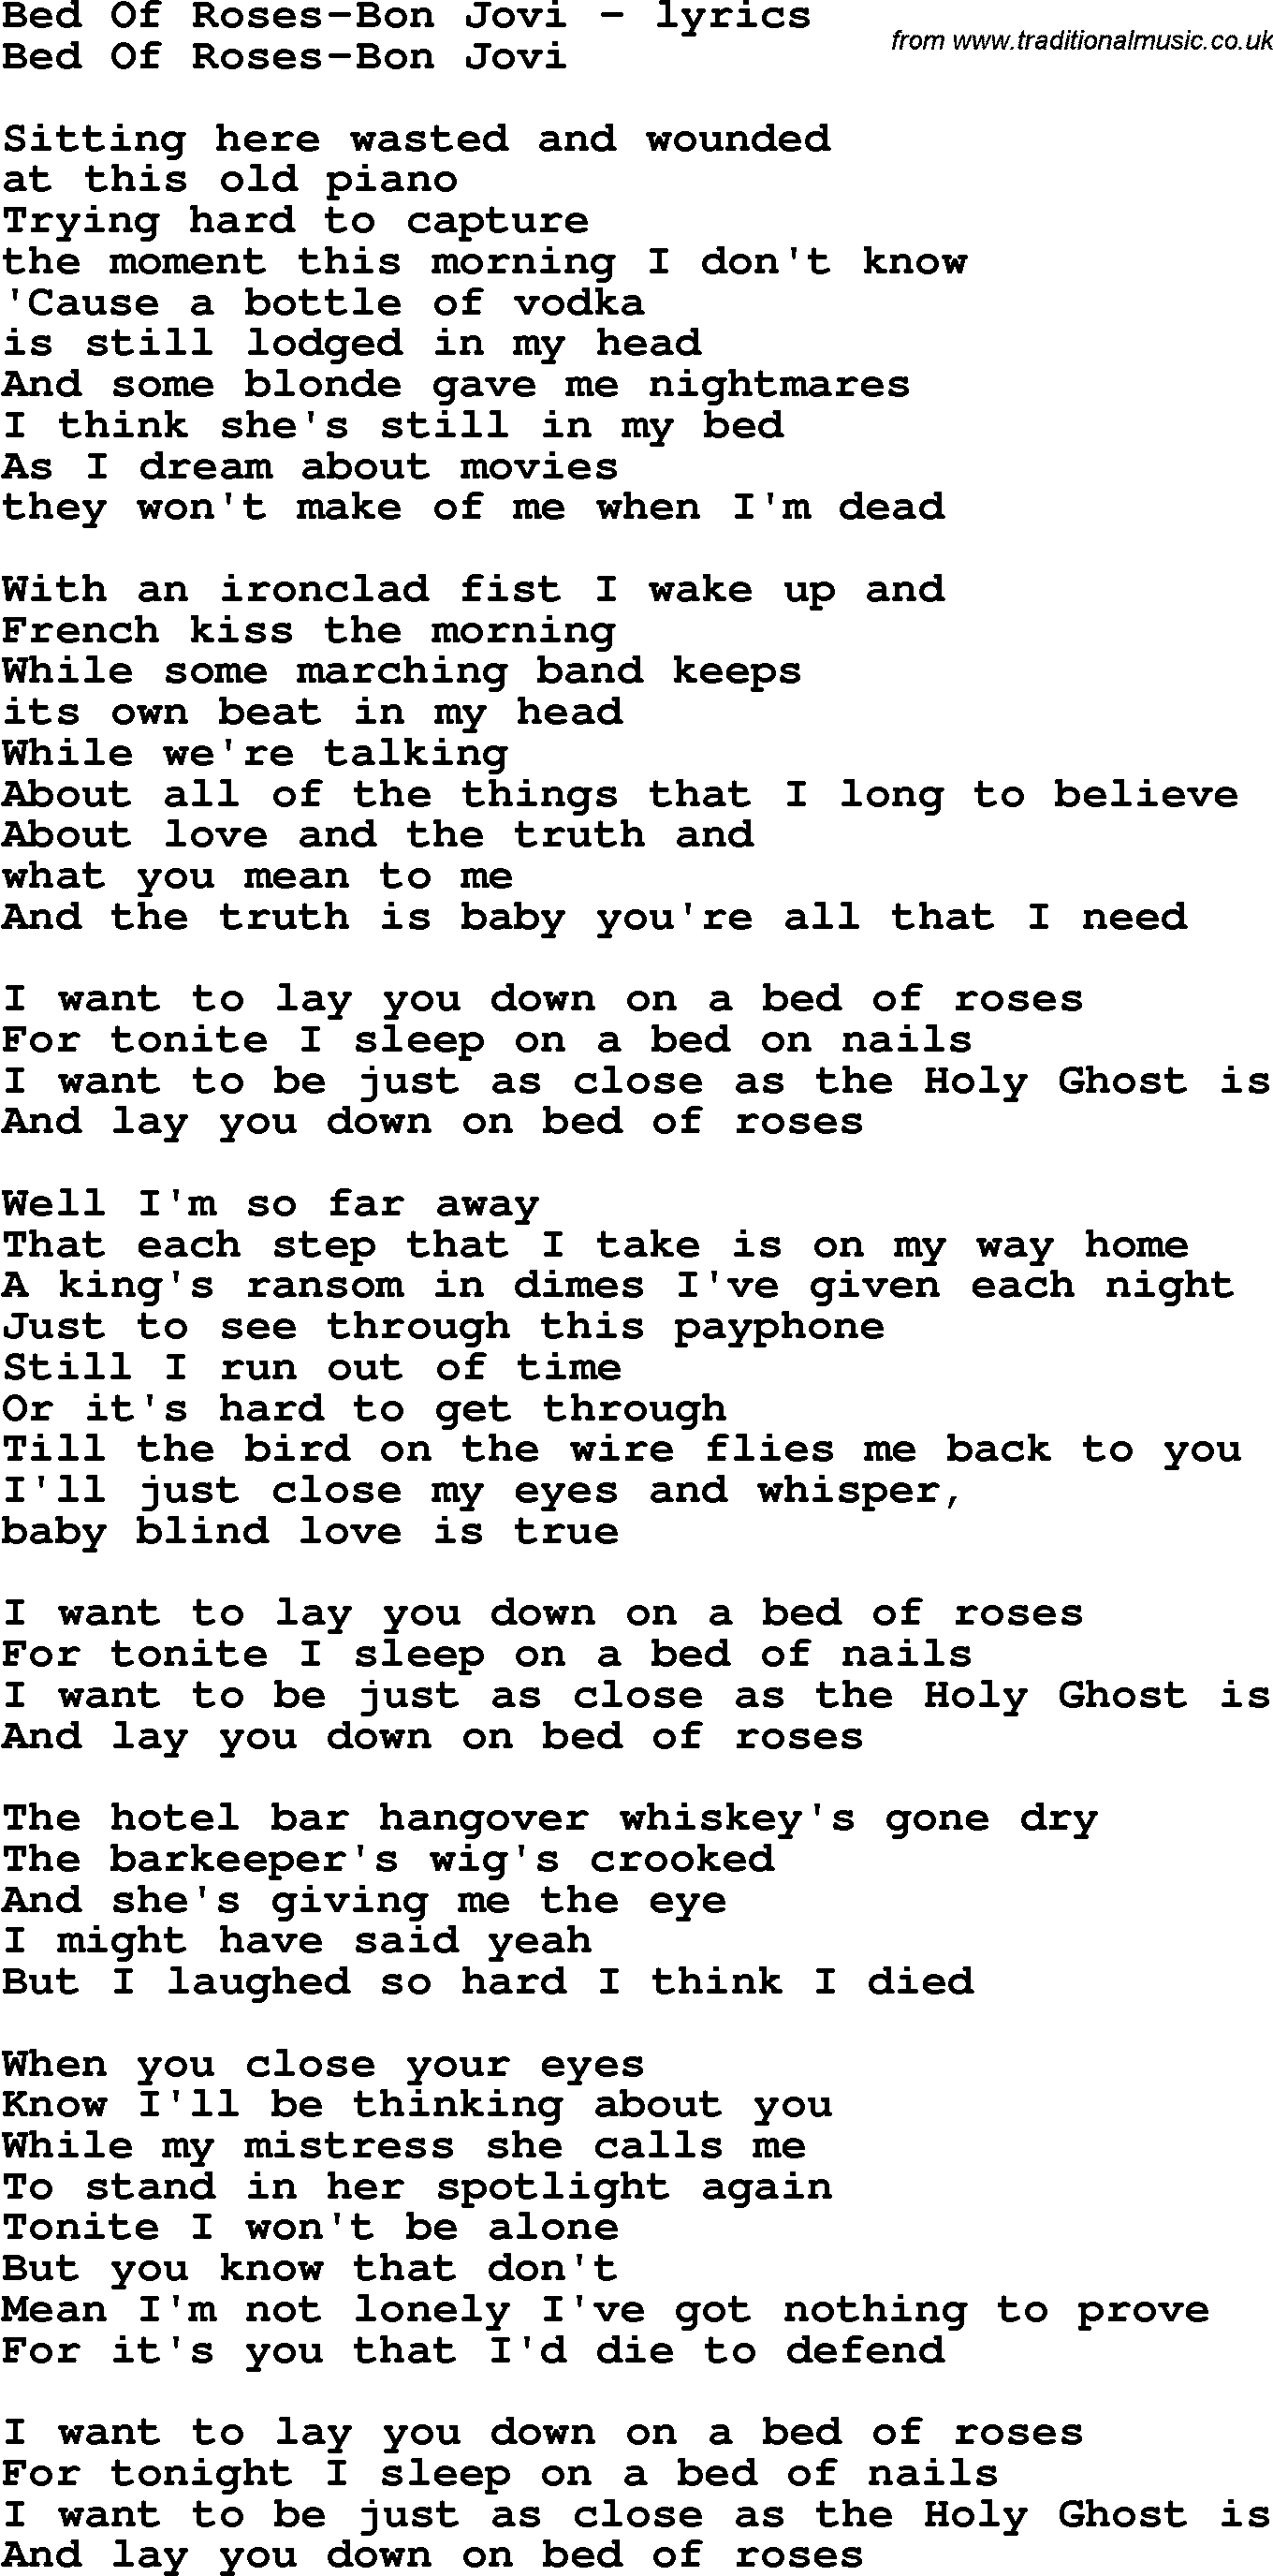 Love Song Lyrics for: Bed Of Roses-Bon Jovi